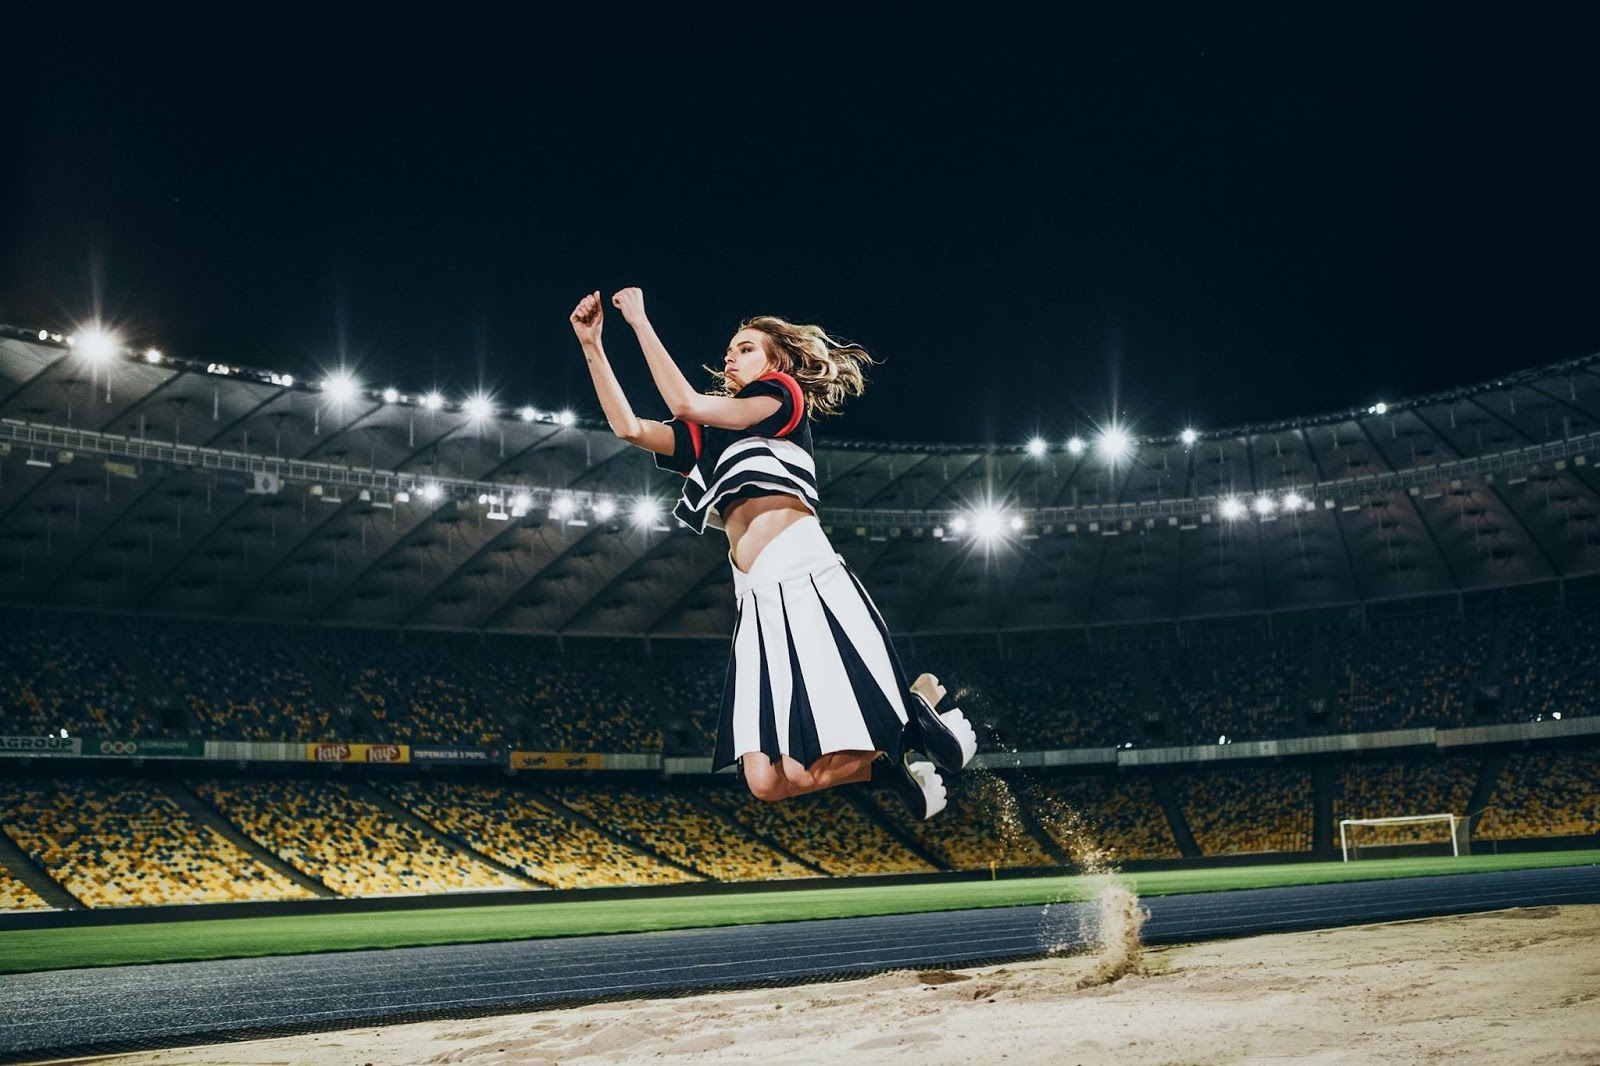 Девочка на стадионе. Фотосессия спорт журнал стадион Vogue.